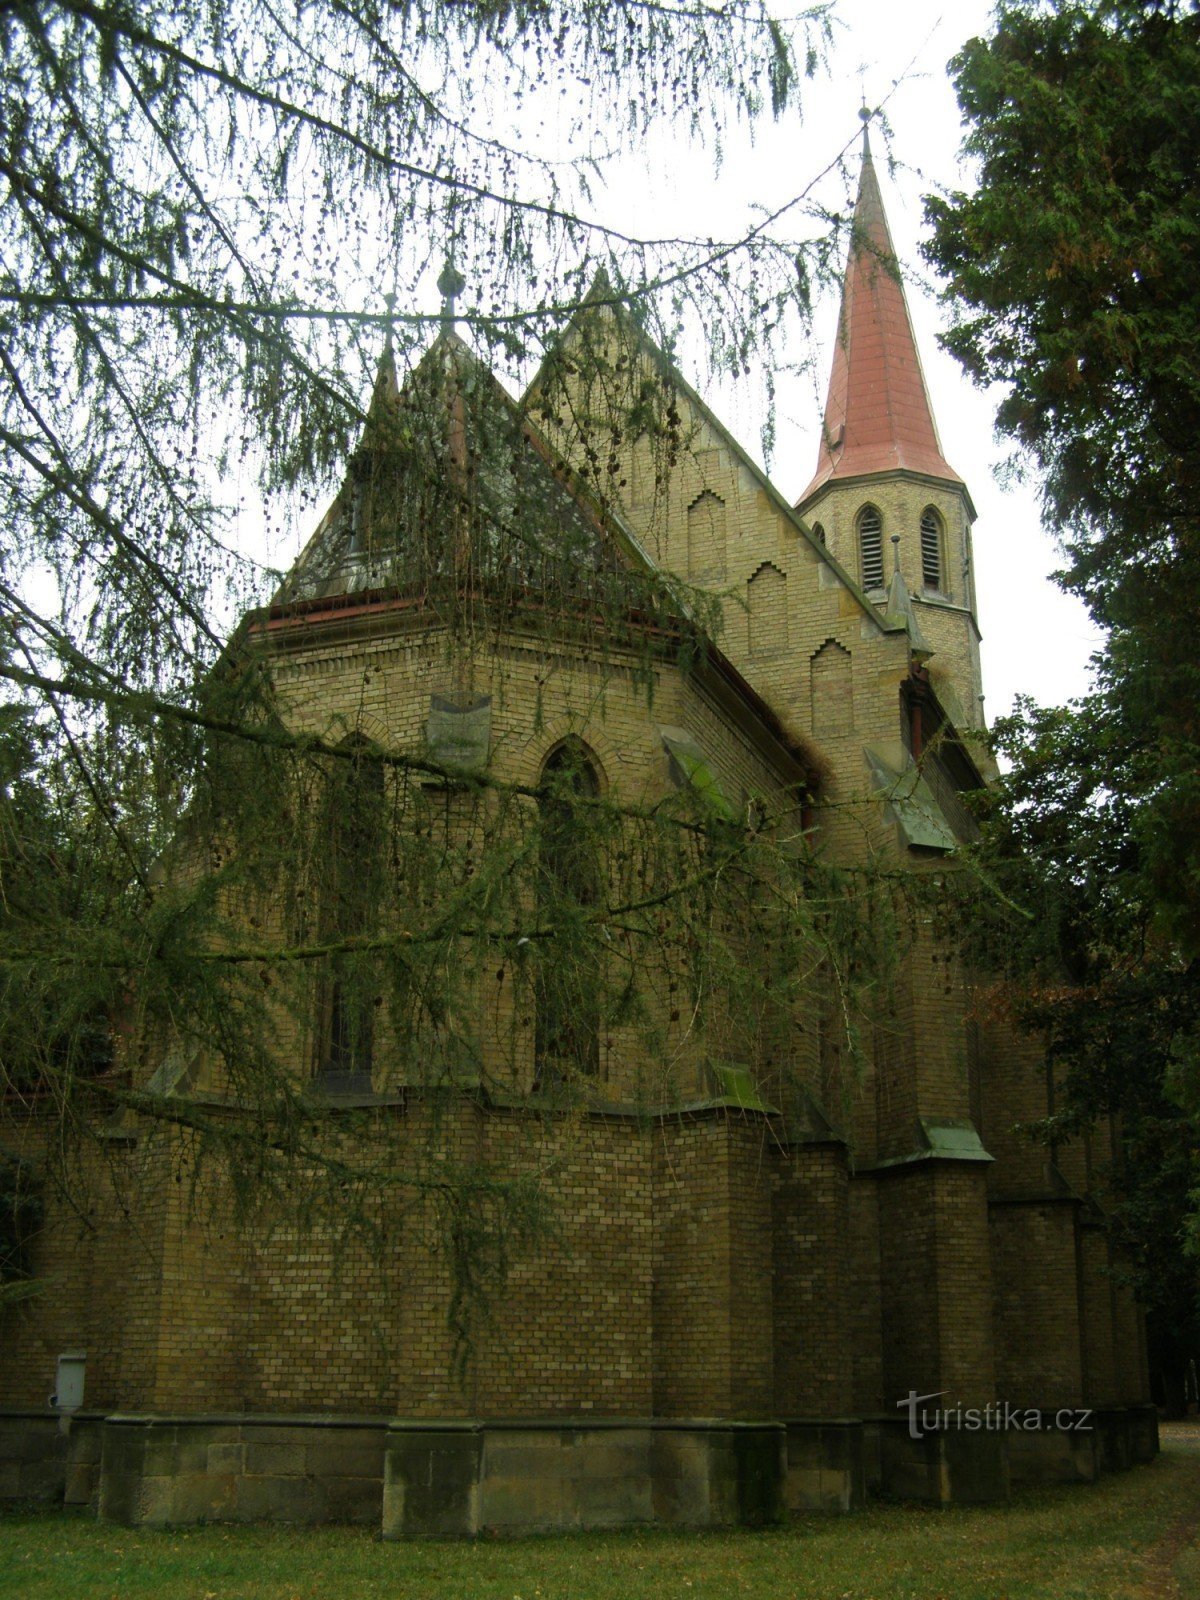 Nový Bydžov - church of the Virgin Mary of the Seven Pains